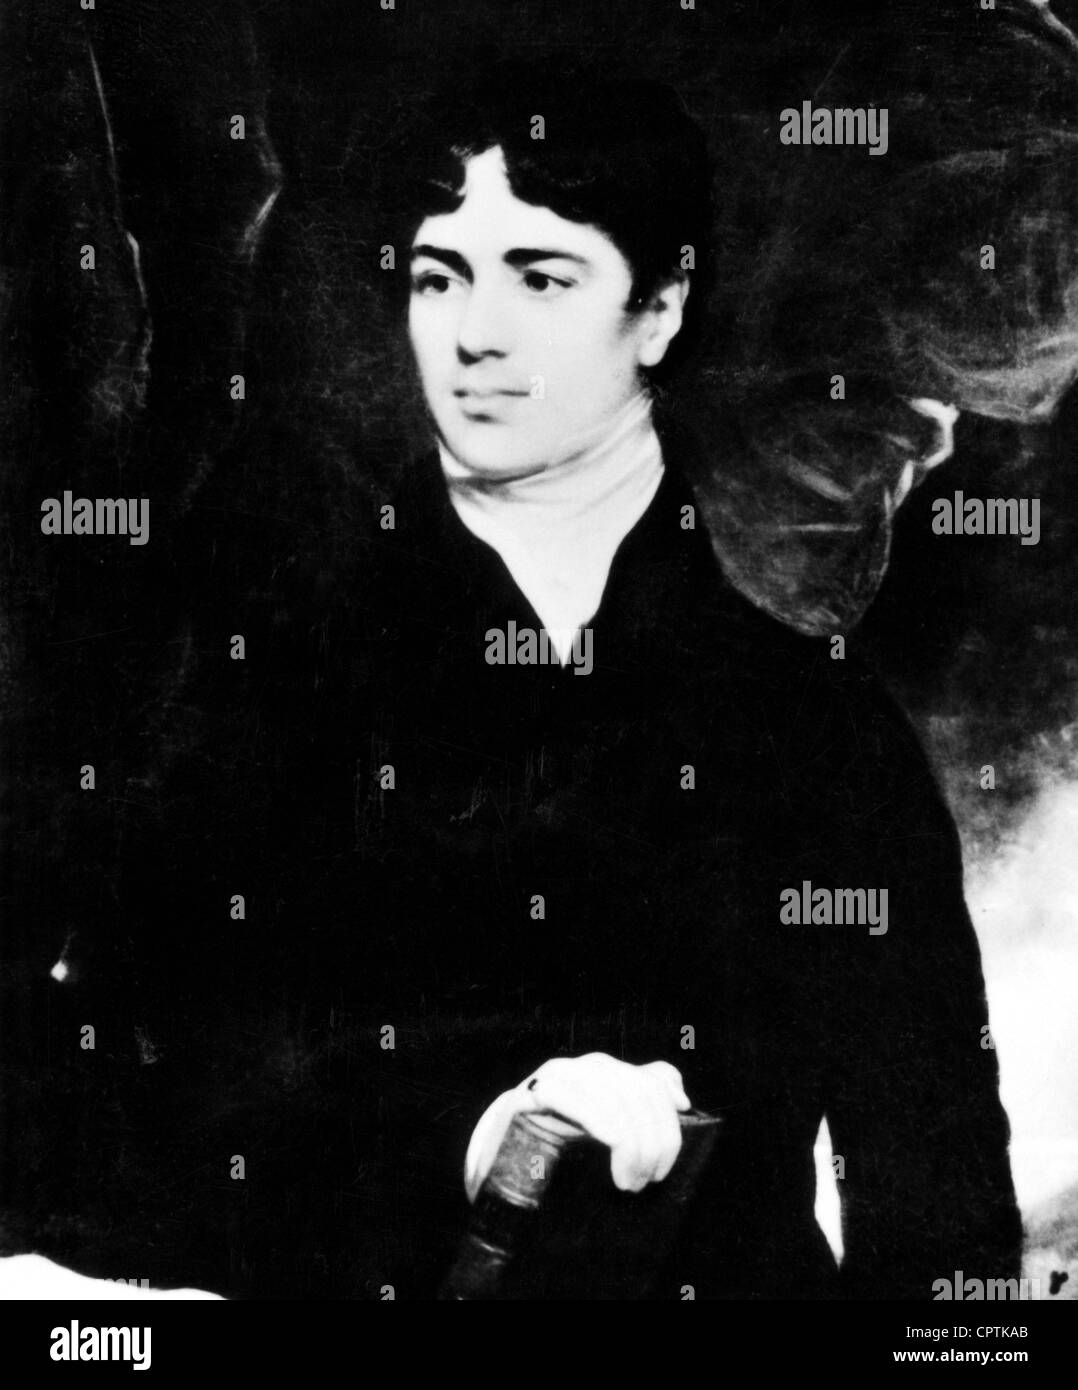 Lambton, John George, 1st earl of Durham, 12.4.173 - 28.6.1840, britischer Politiker (Whig Party), halbe Länge, 19. Jahrhundert, Stockfoto